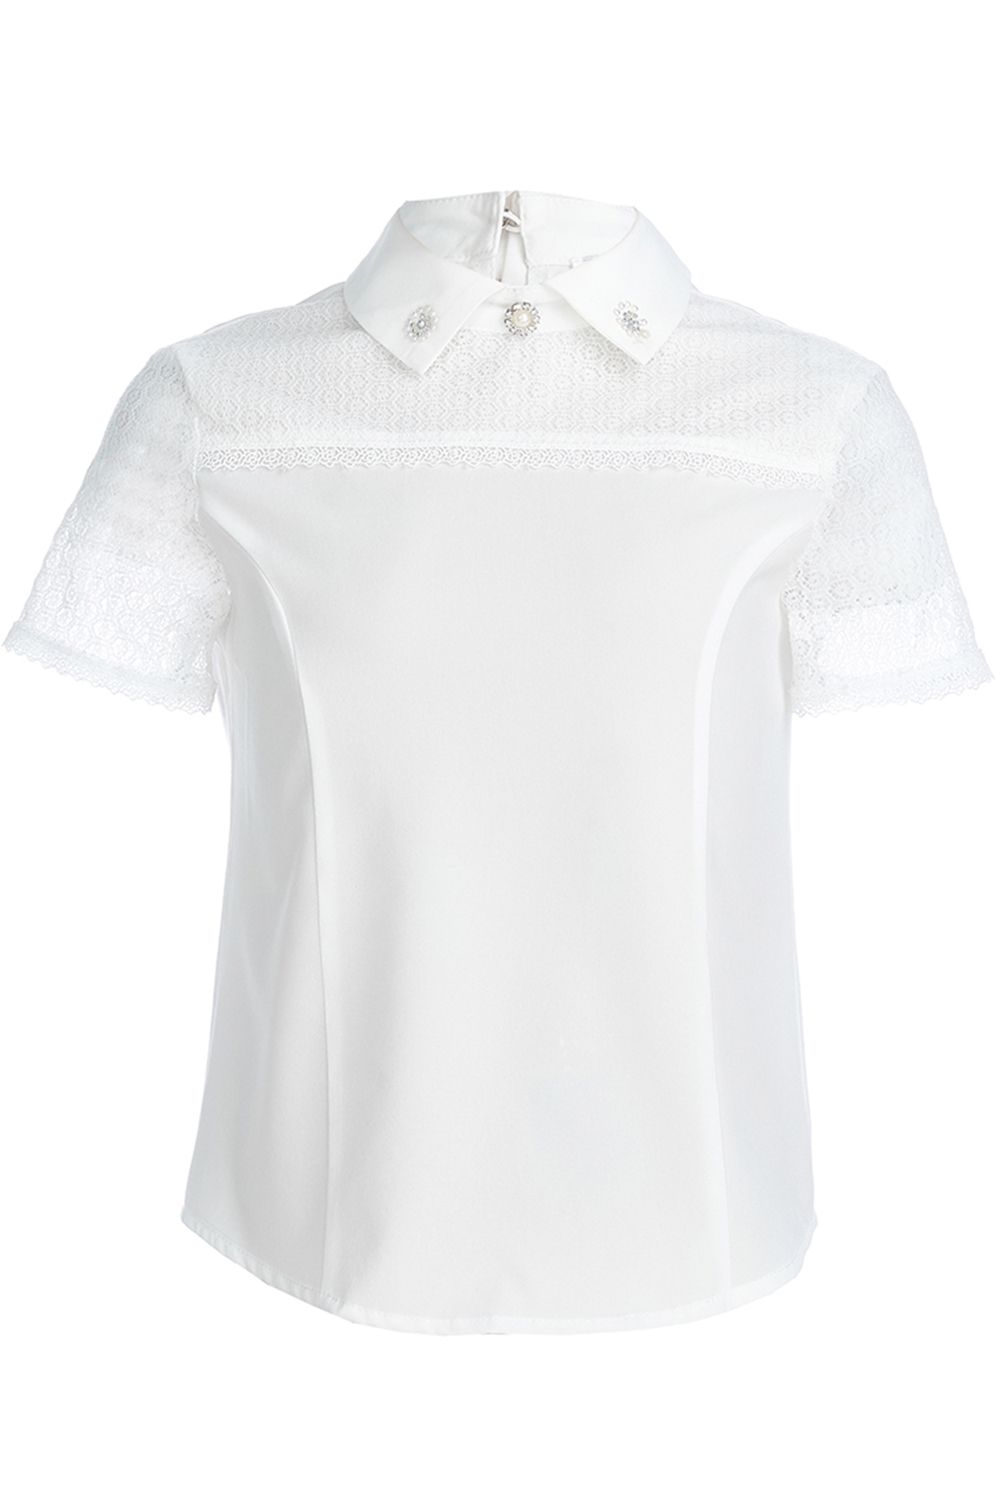 Блуза Cleverly, размер 122, цвет белый S9CT101-0607/0607 - фото 1